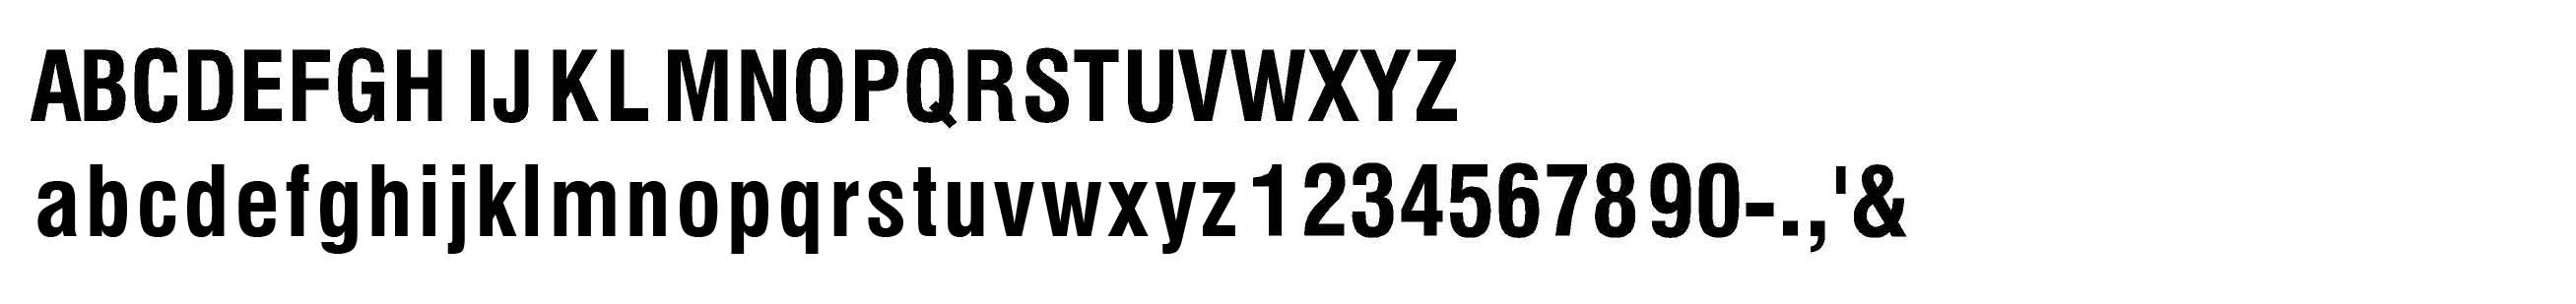 Helvetica Condensed Bold Standard EZLit Type Style